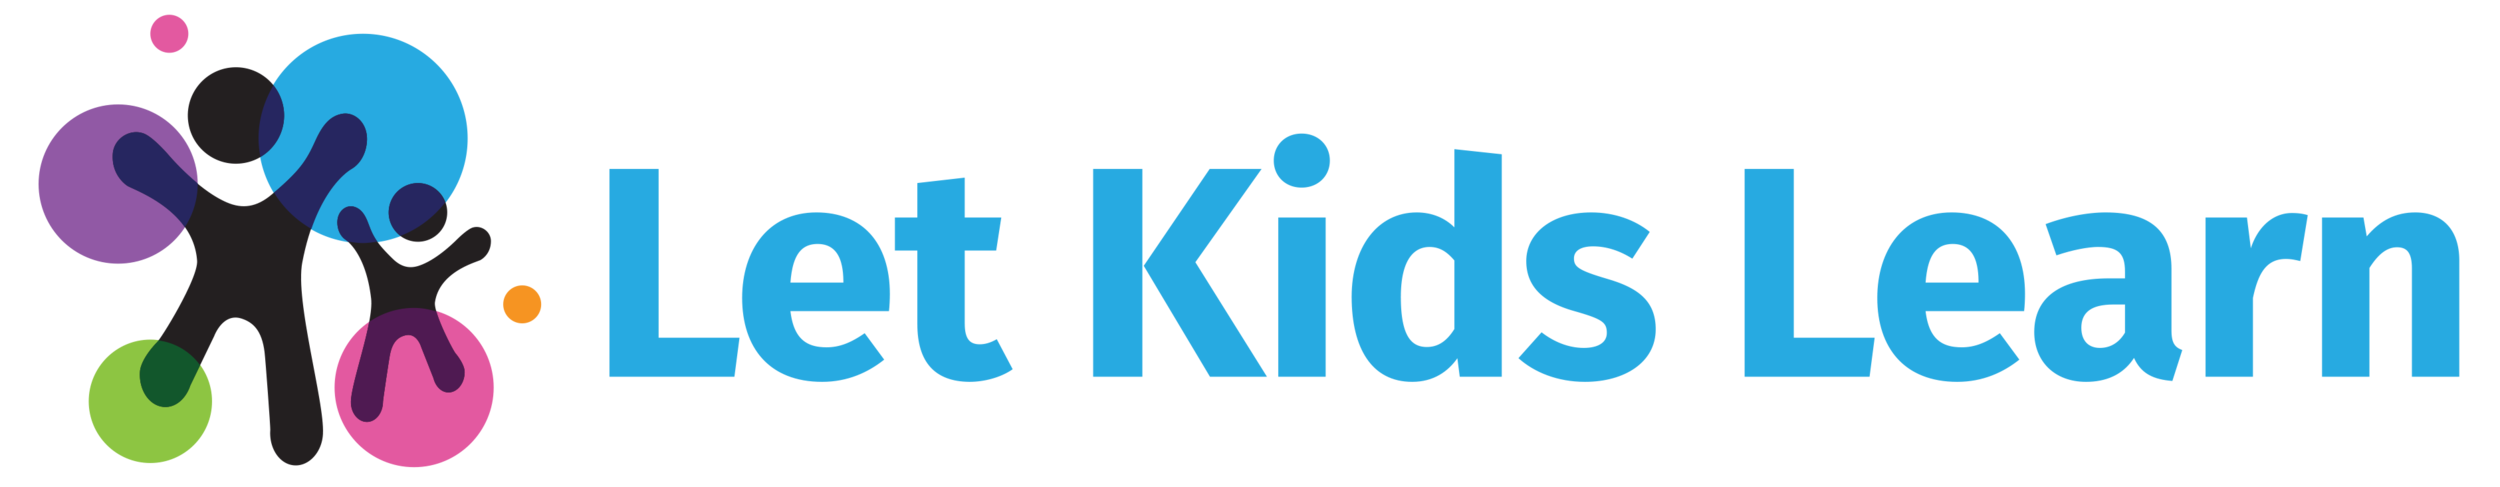 Let+Kids+Learn+logo+horizontal